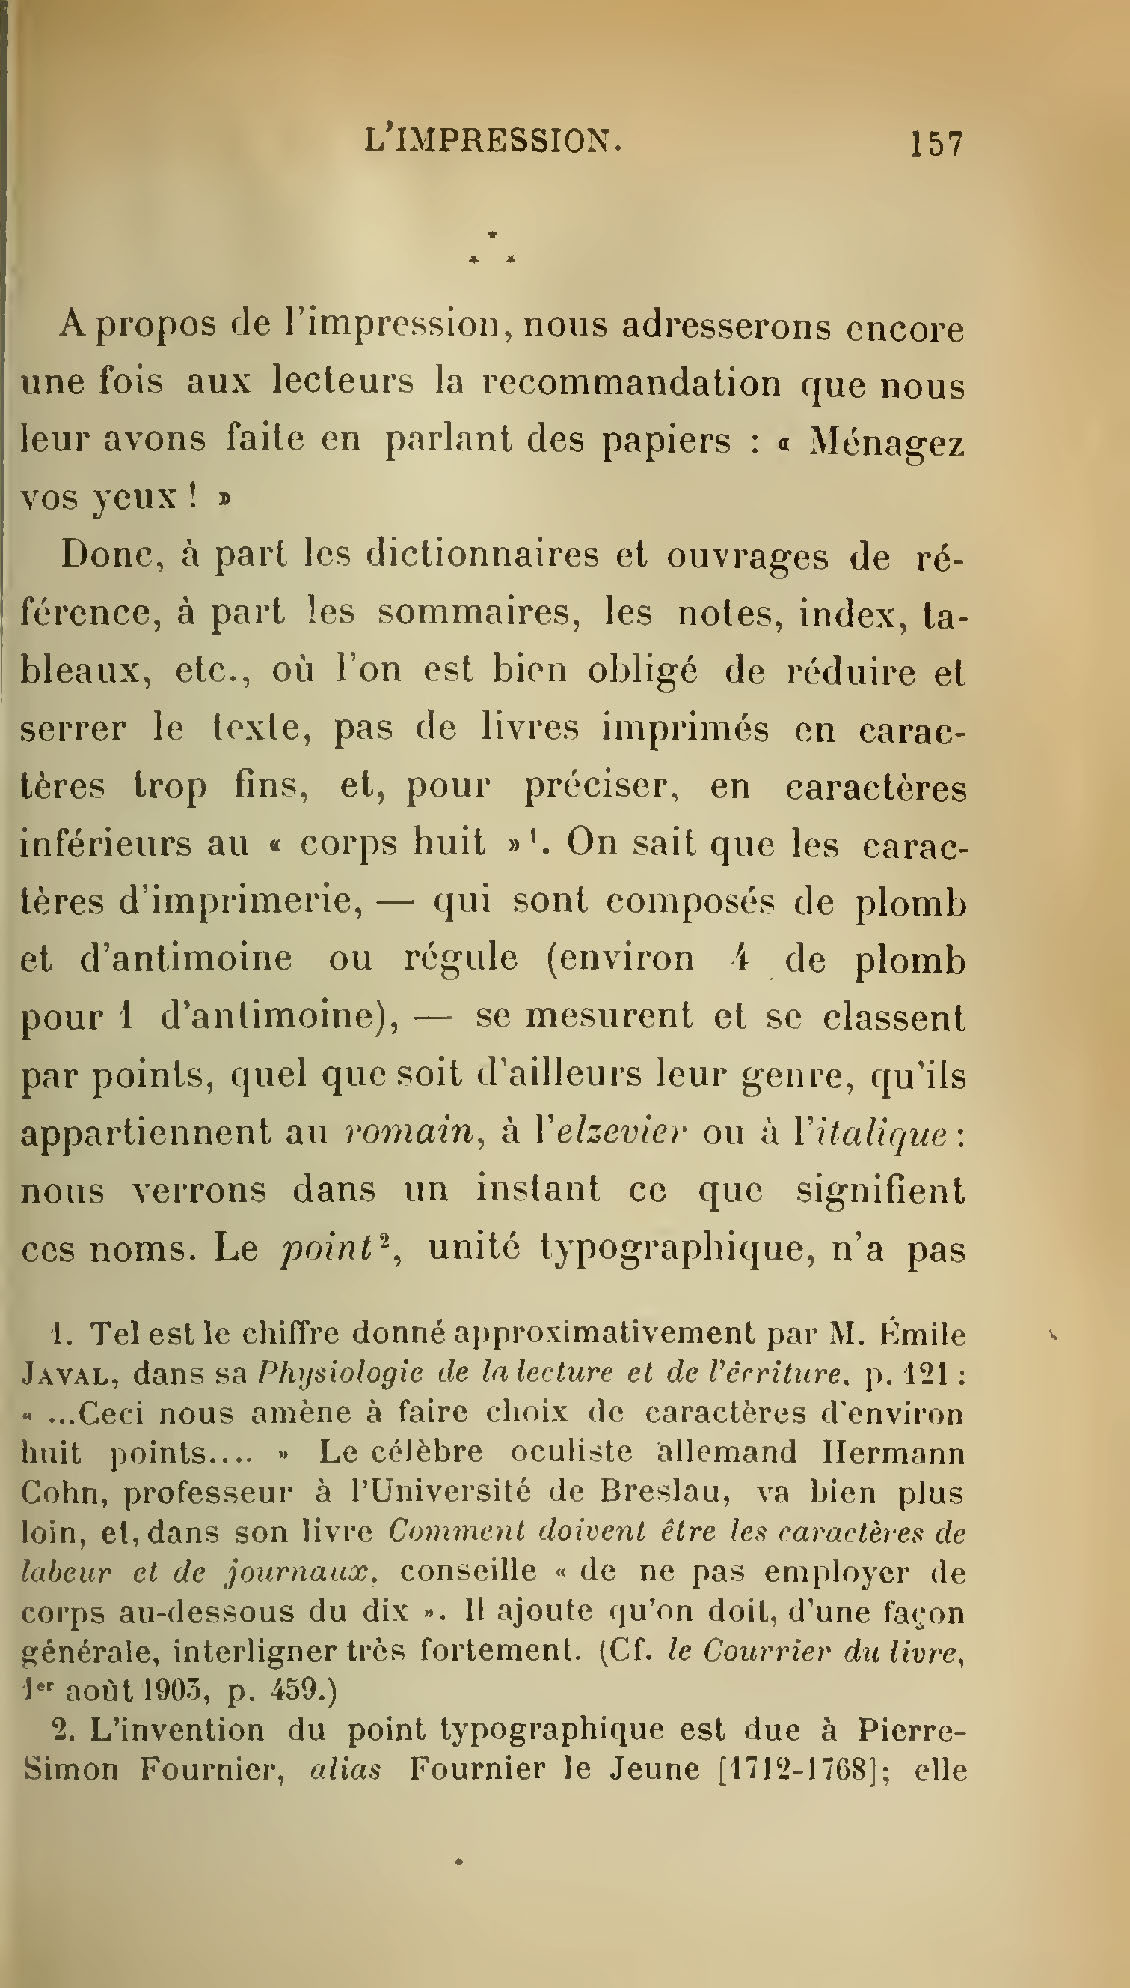 Albert Cim, Le Livre, t. III, p. 157.